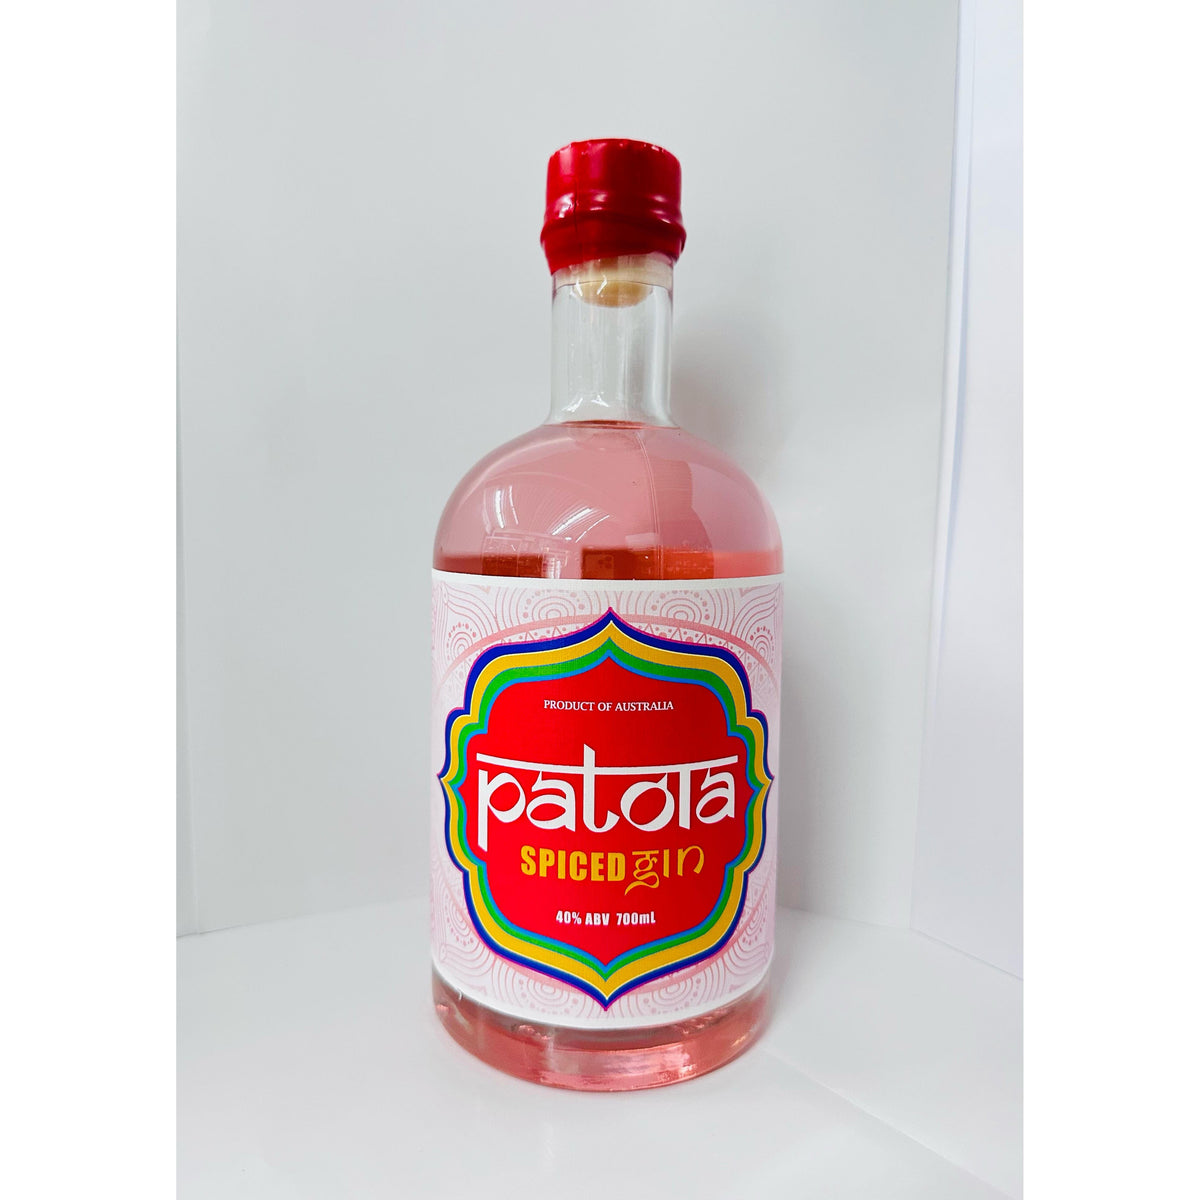 Patola Spiced Gin 700ml